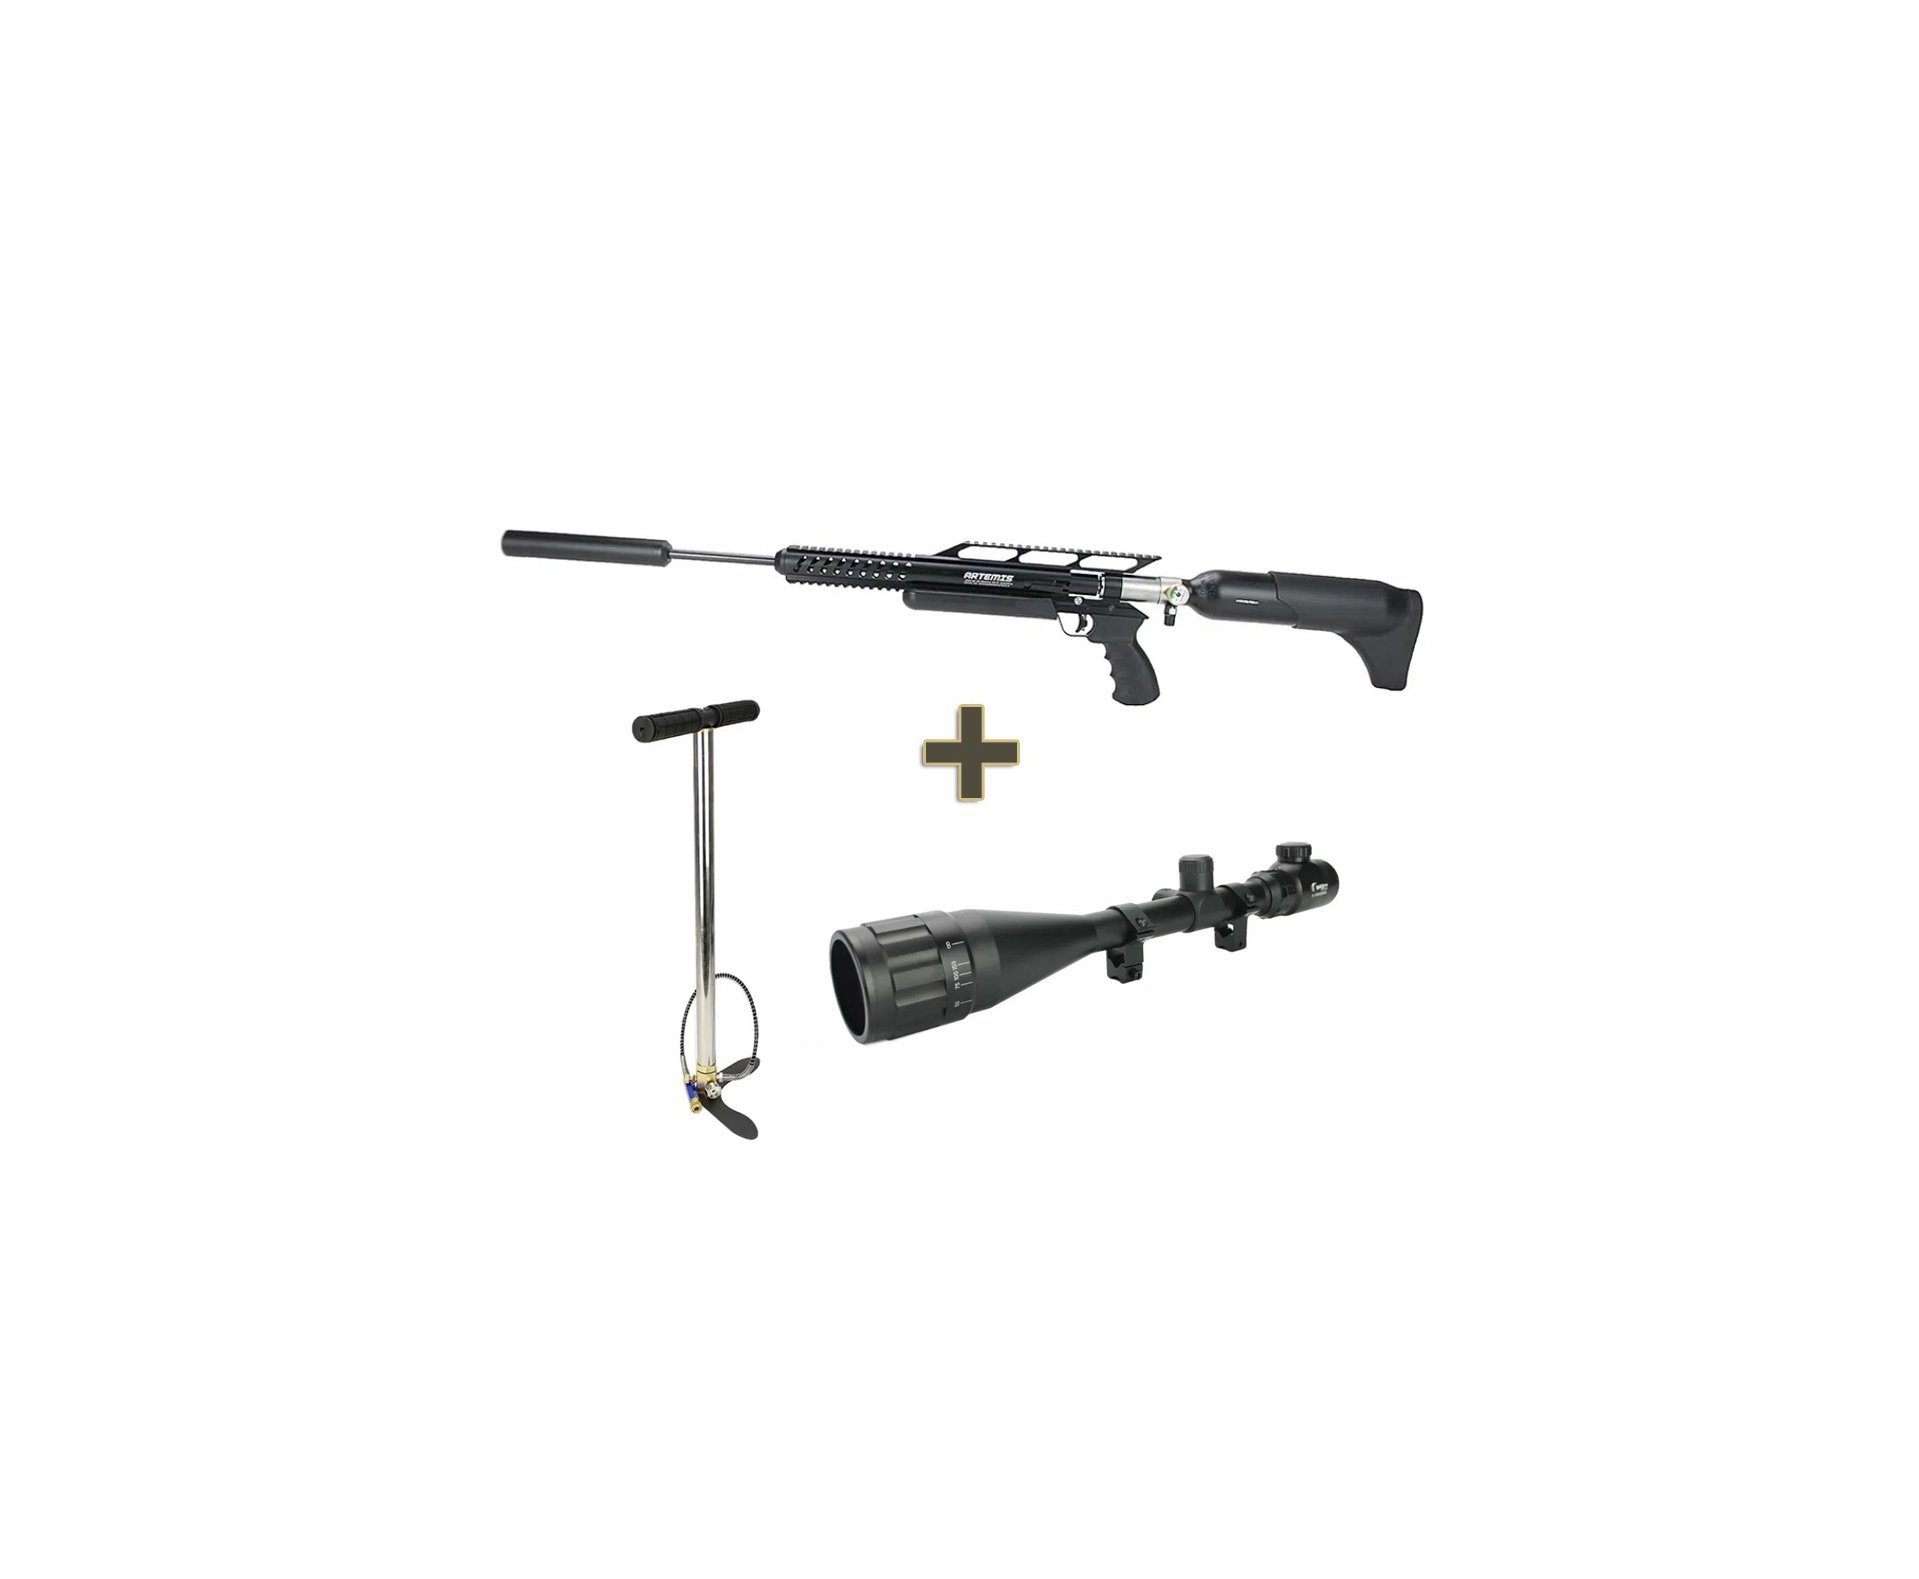 Carabina de Pressão PCP Artemis M18 Hammer 5.5mm - FXR Armas + Bomba + Luneta 6-24x50 Retículo Iluminado Mil-Dot Paralax